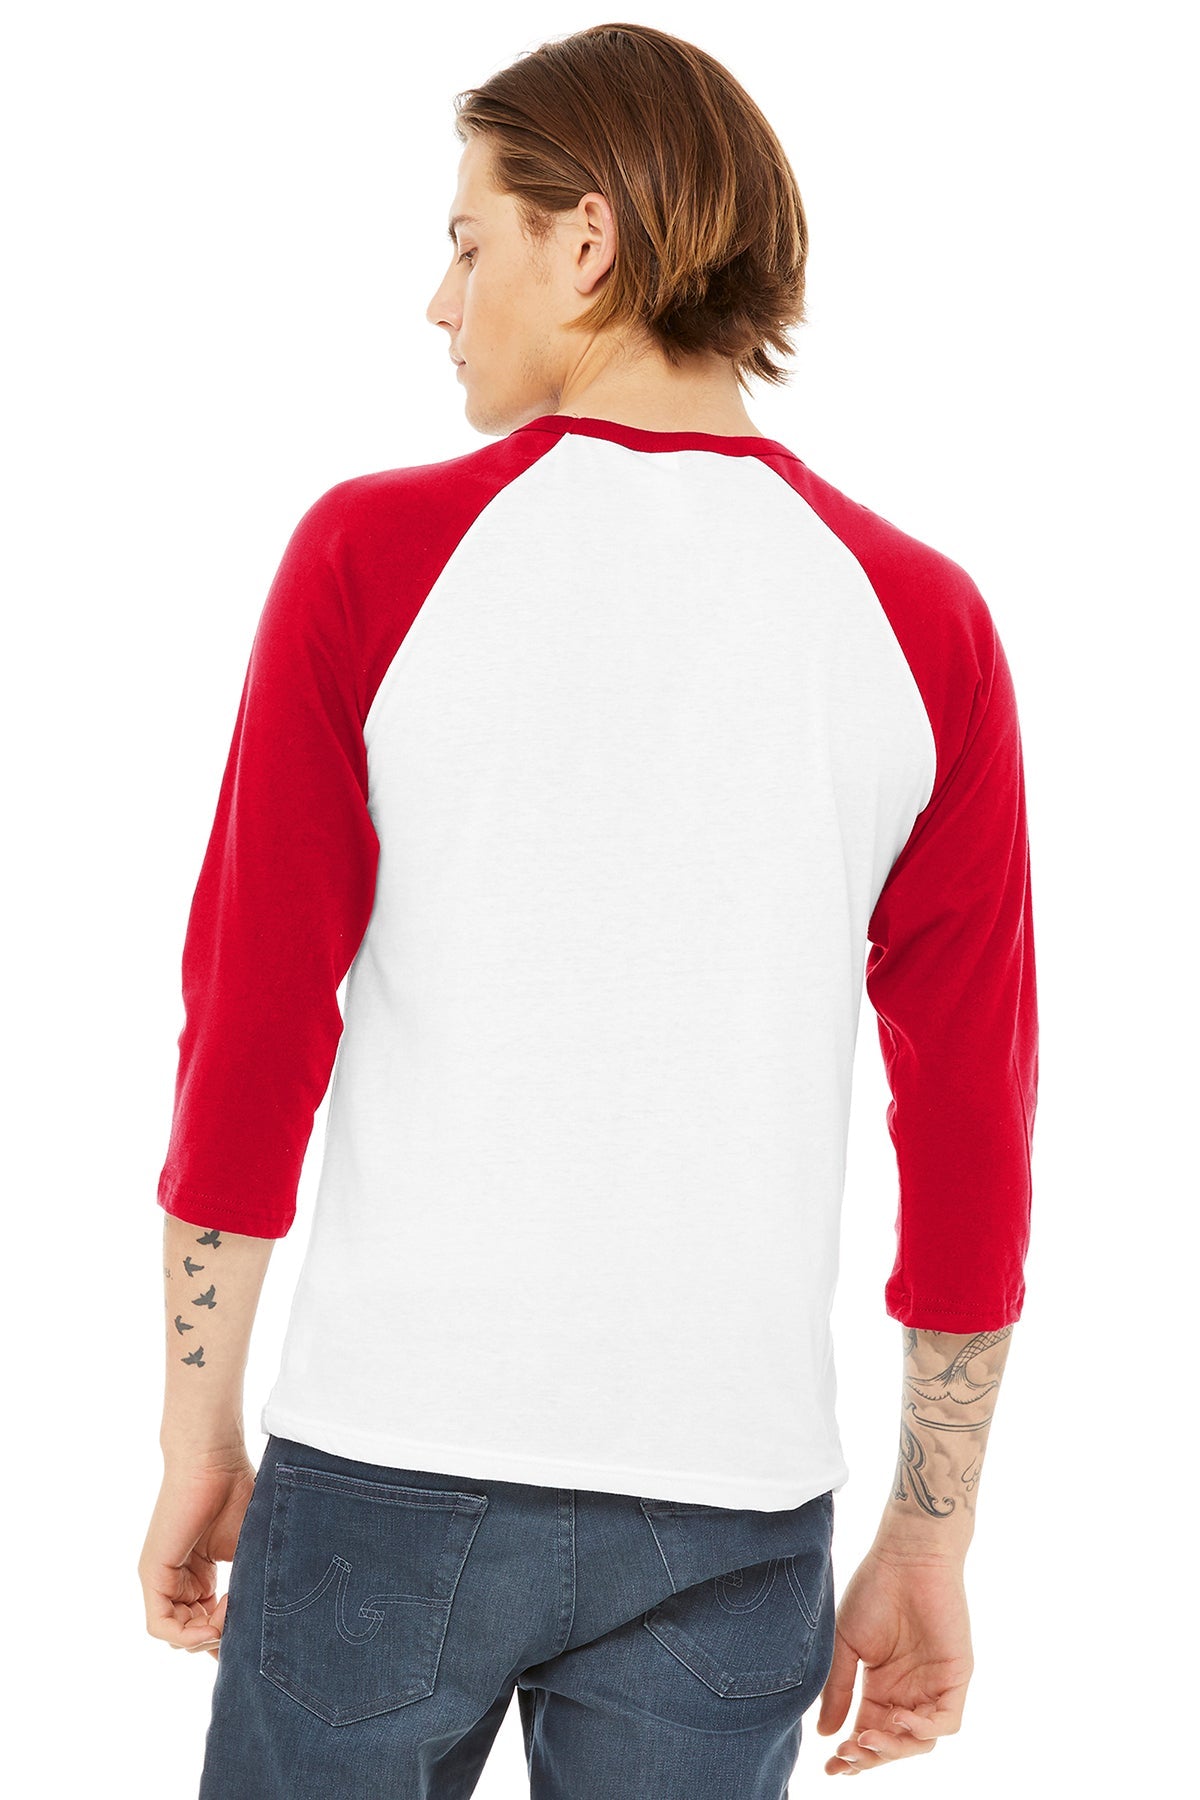 bella + canvas unisex 3/4-sleeve baseball t-shirt 3200 white/ red